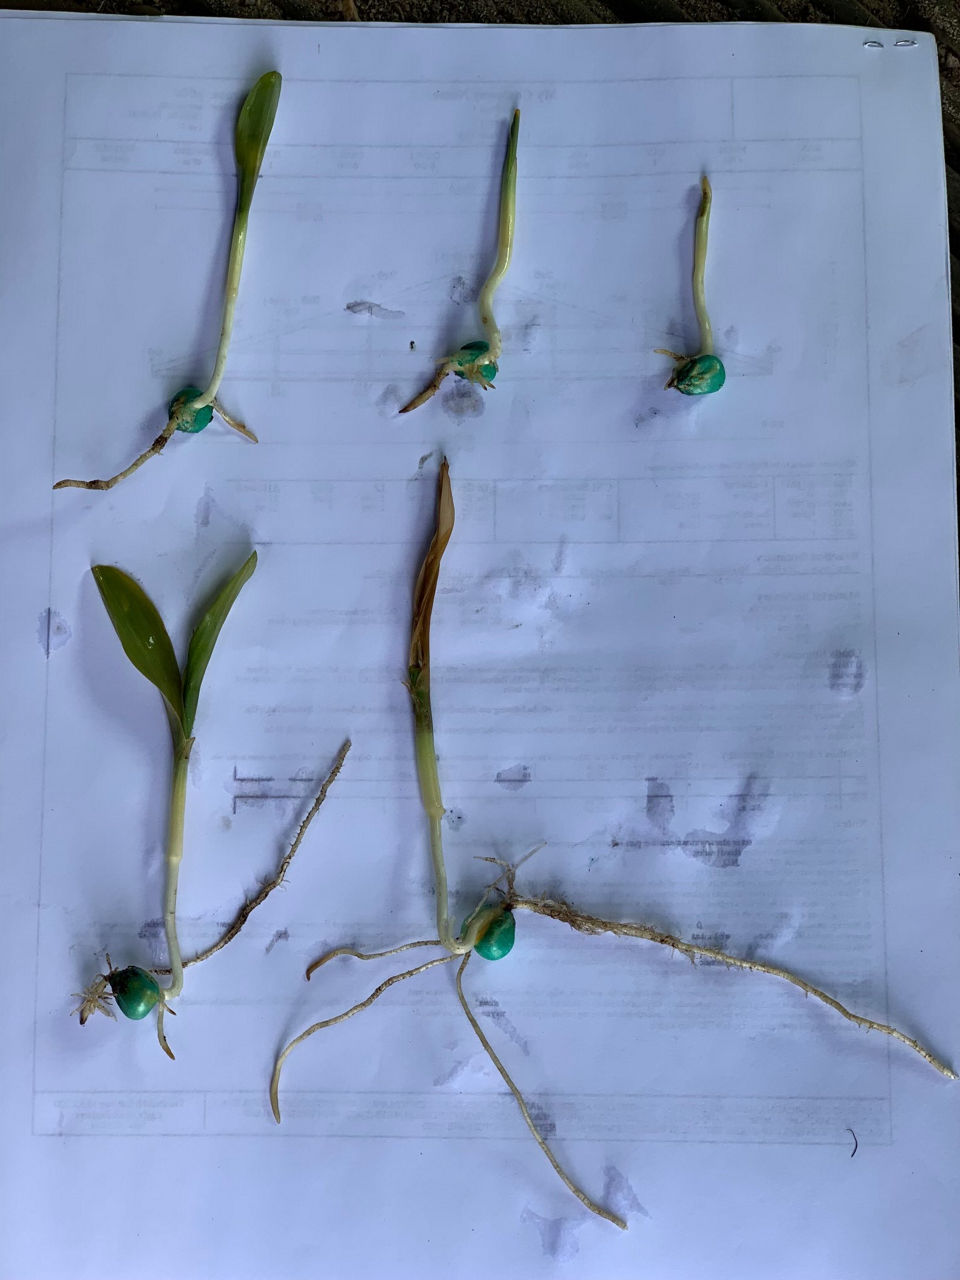 Starter fertilizer injury to corn seedling roots